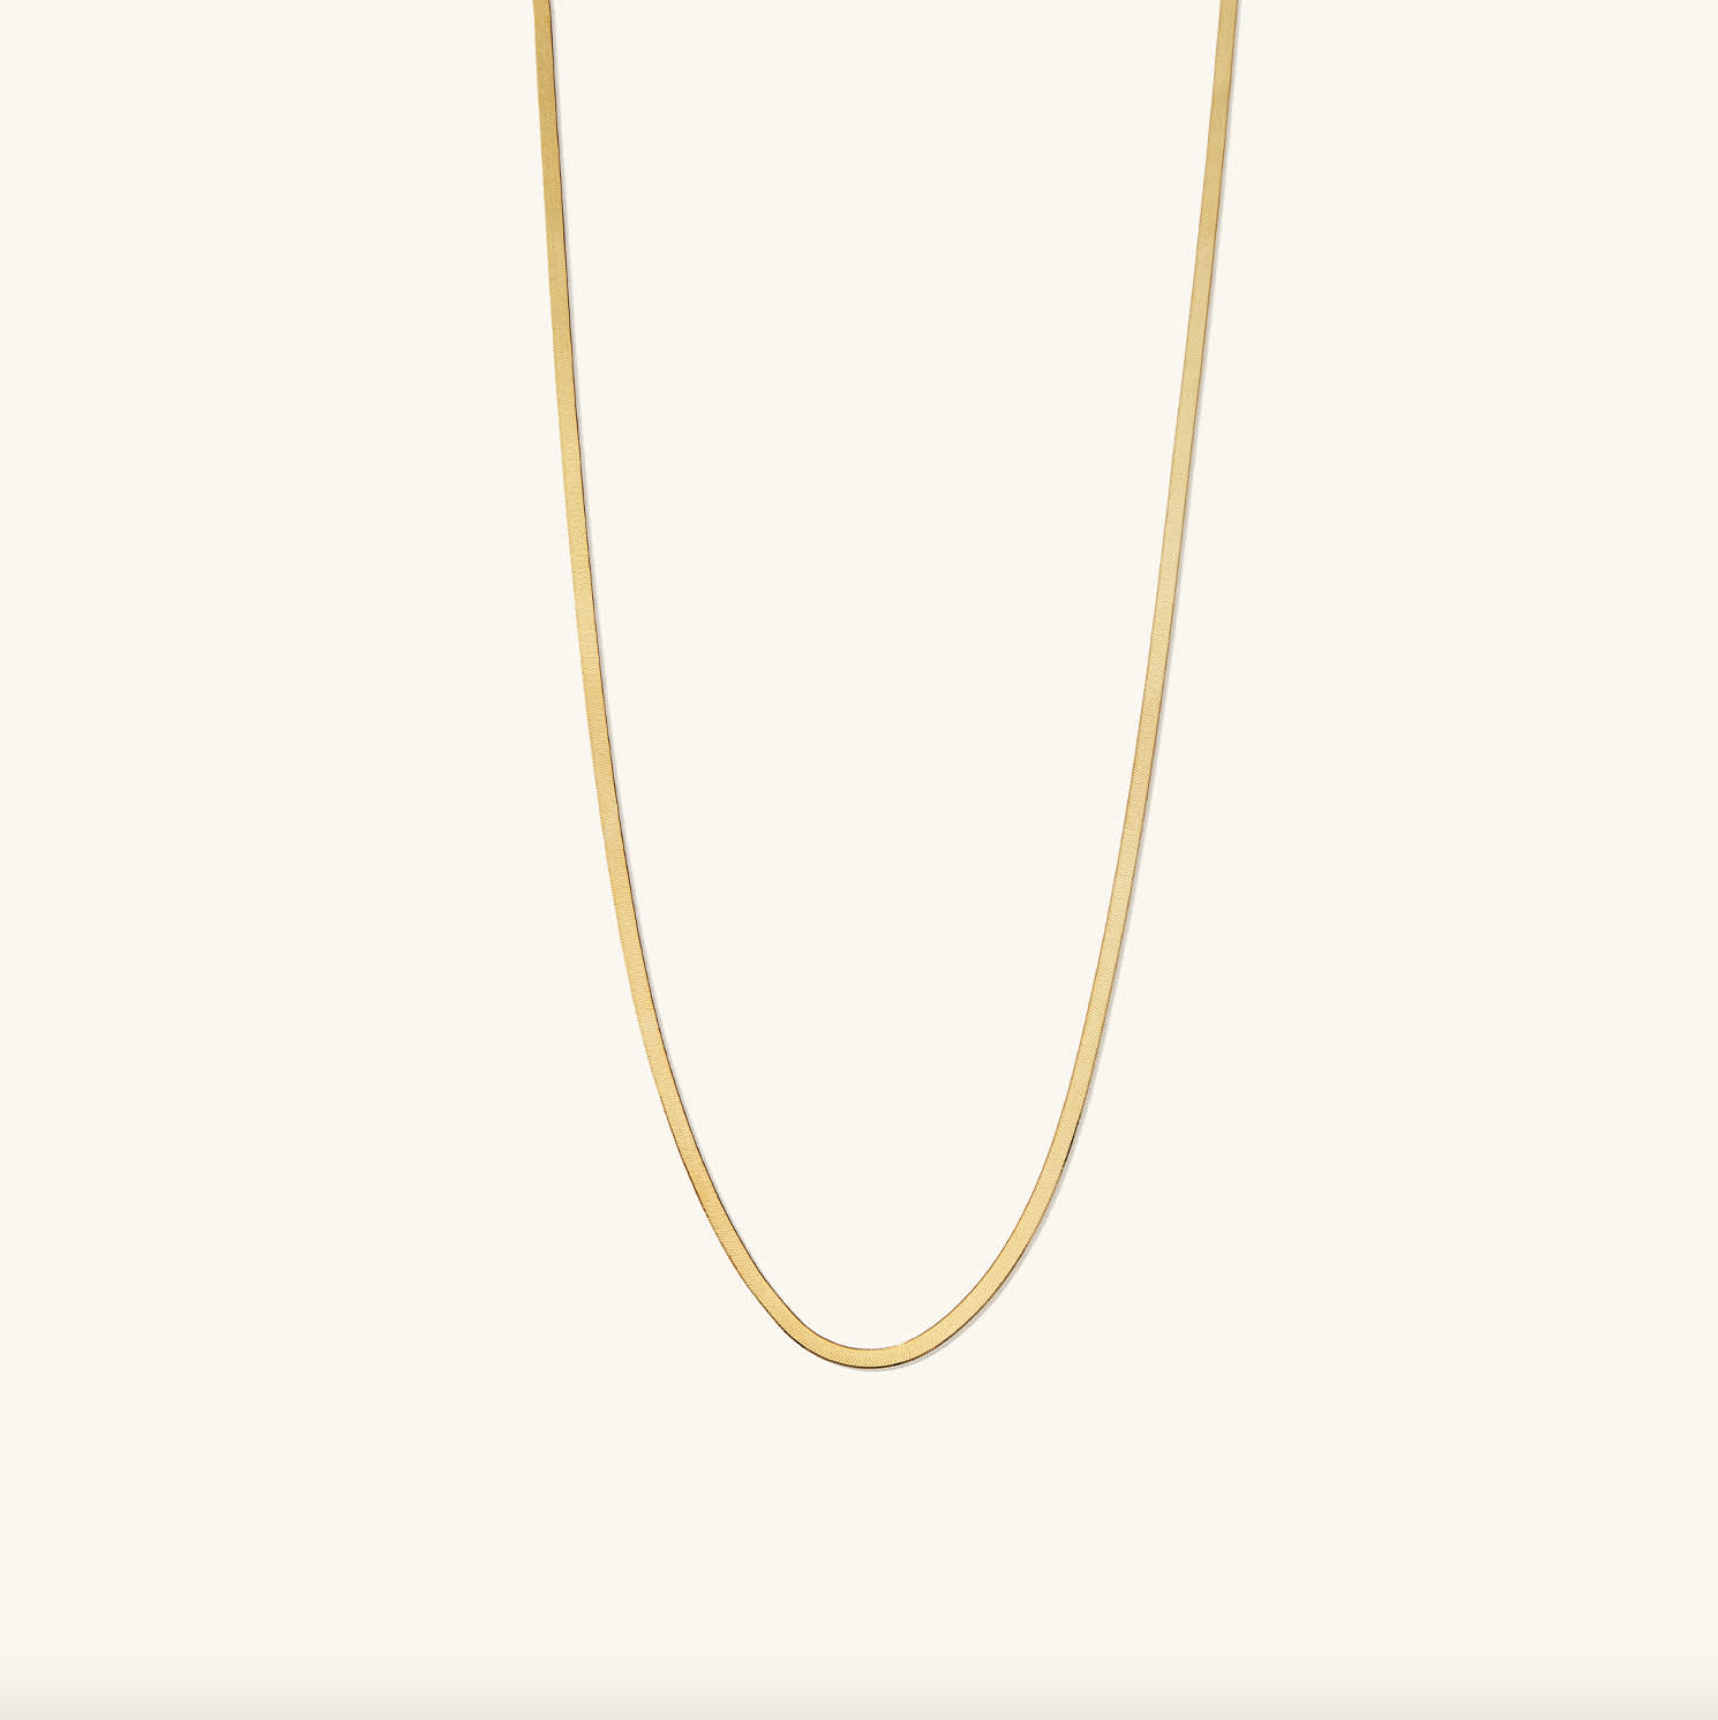 Jenna Lyons Herringbone Chain Necklace